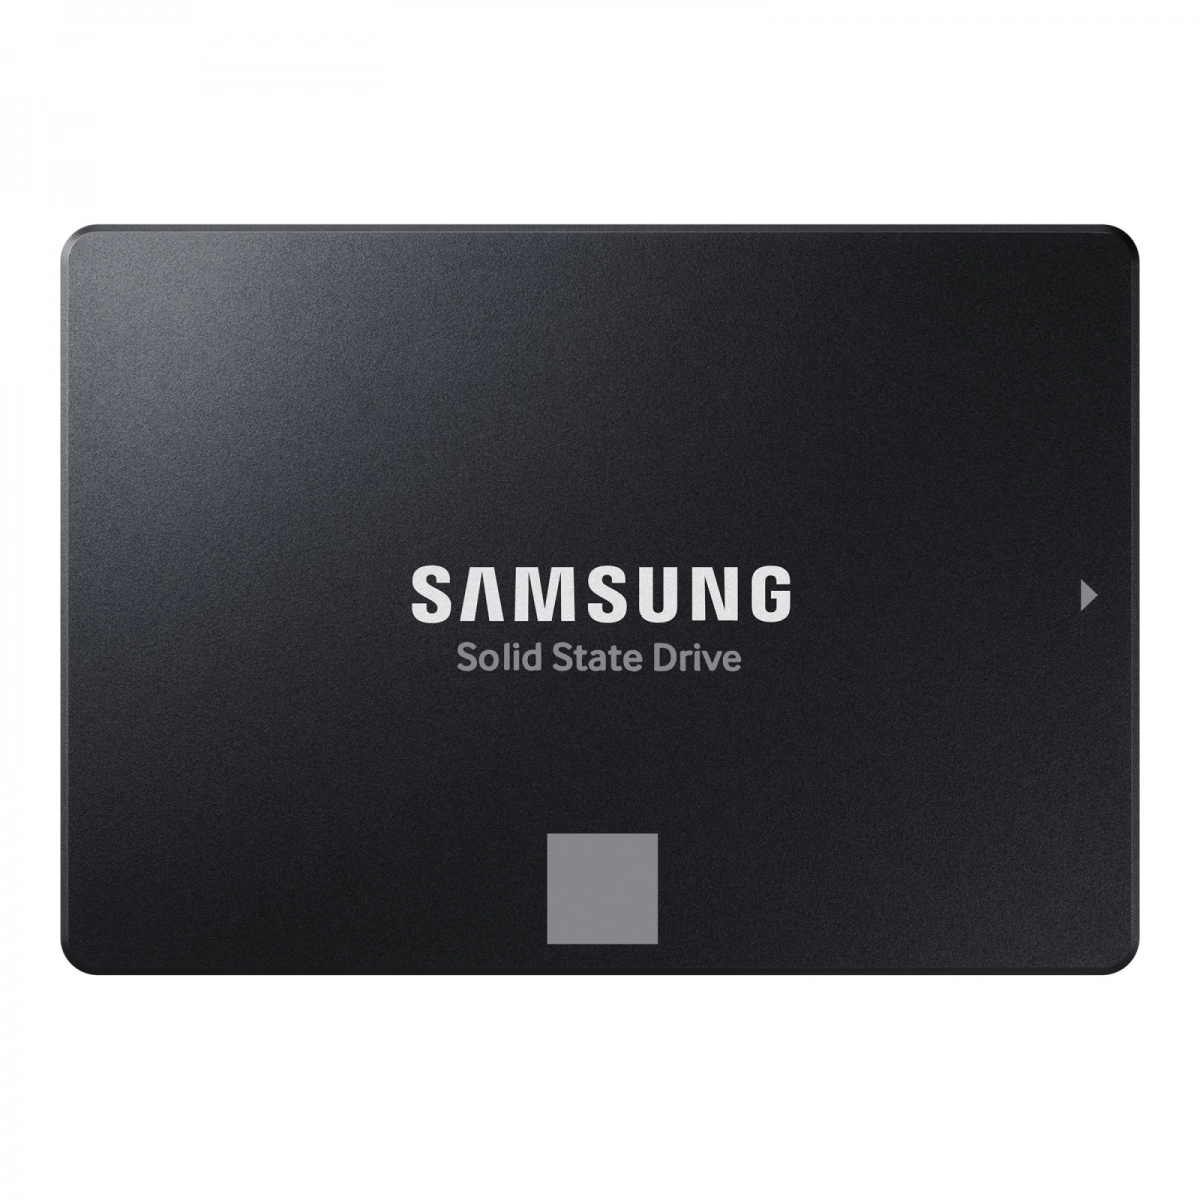 Notebook-Festplatte 500GB, SSD SATA3 MLC für MEDION Akoya E7220 MD98740